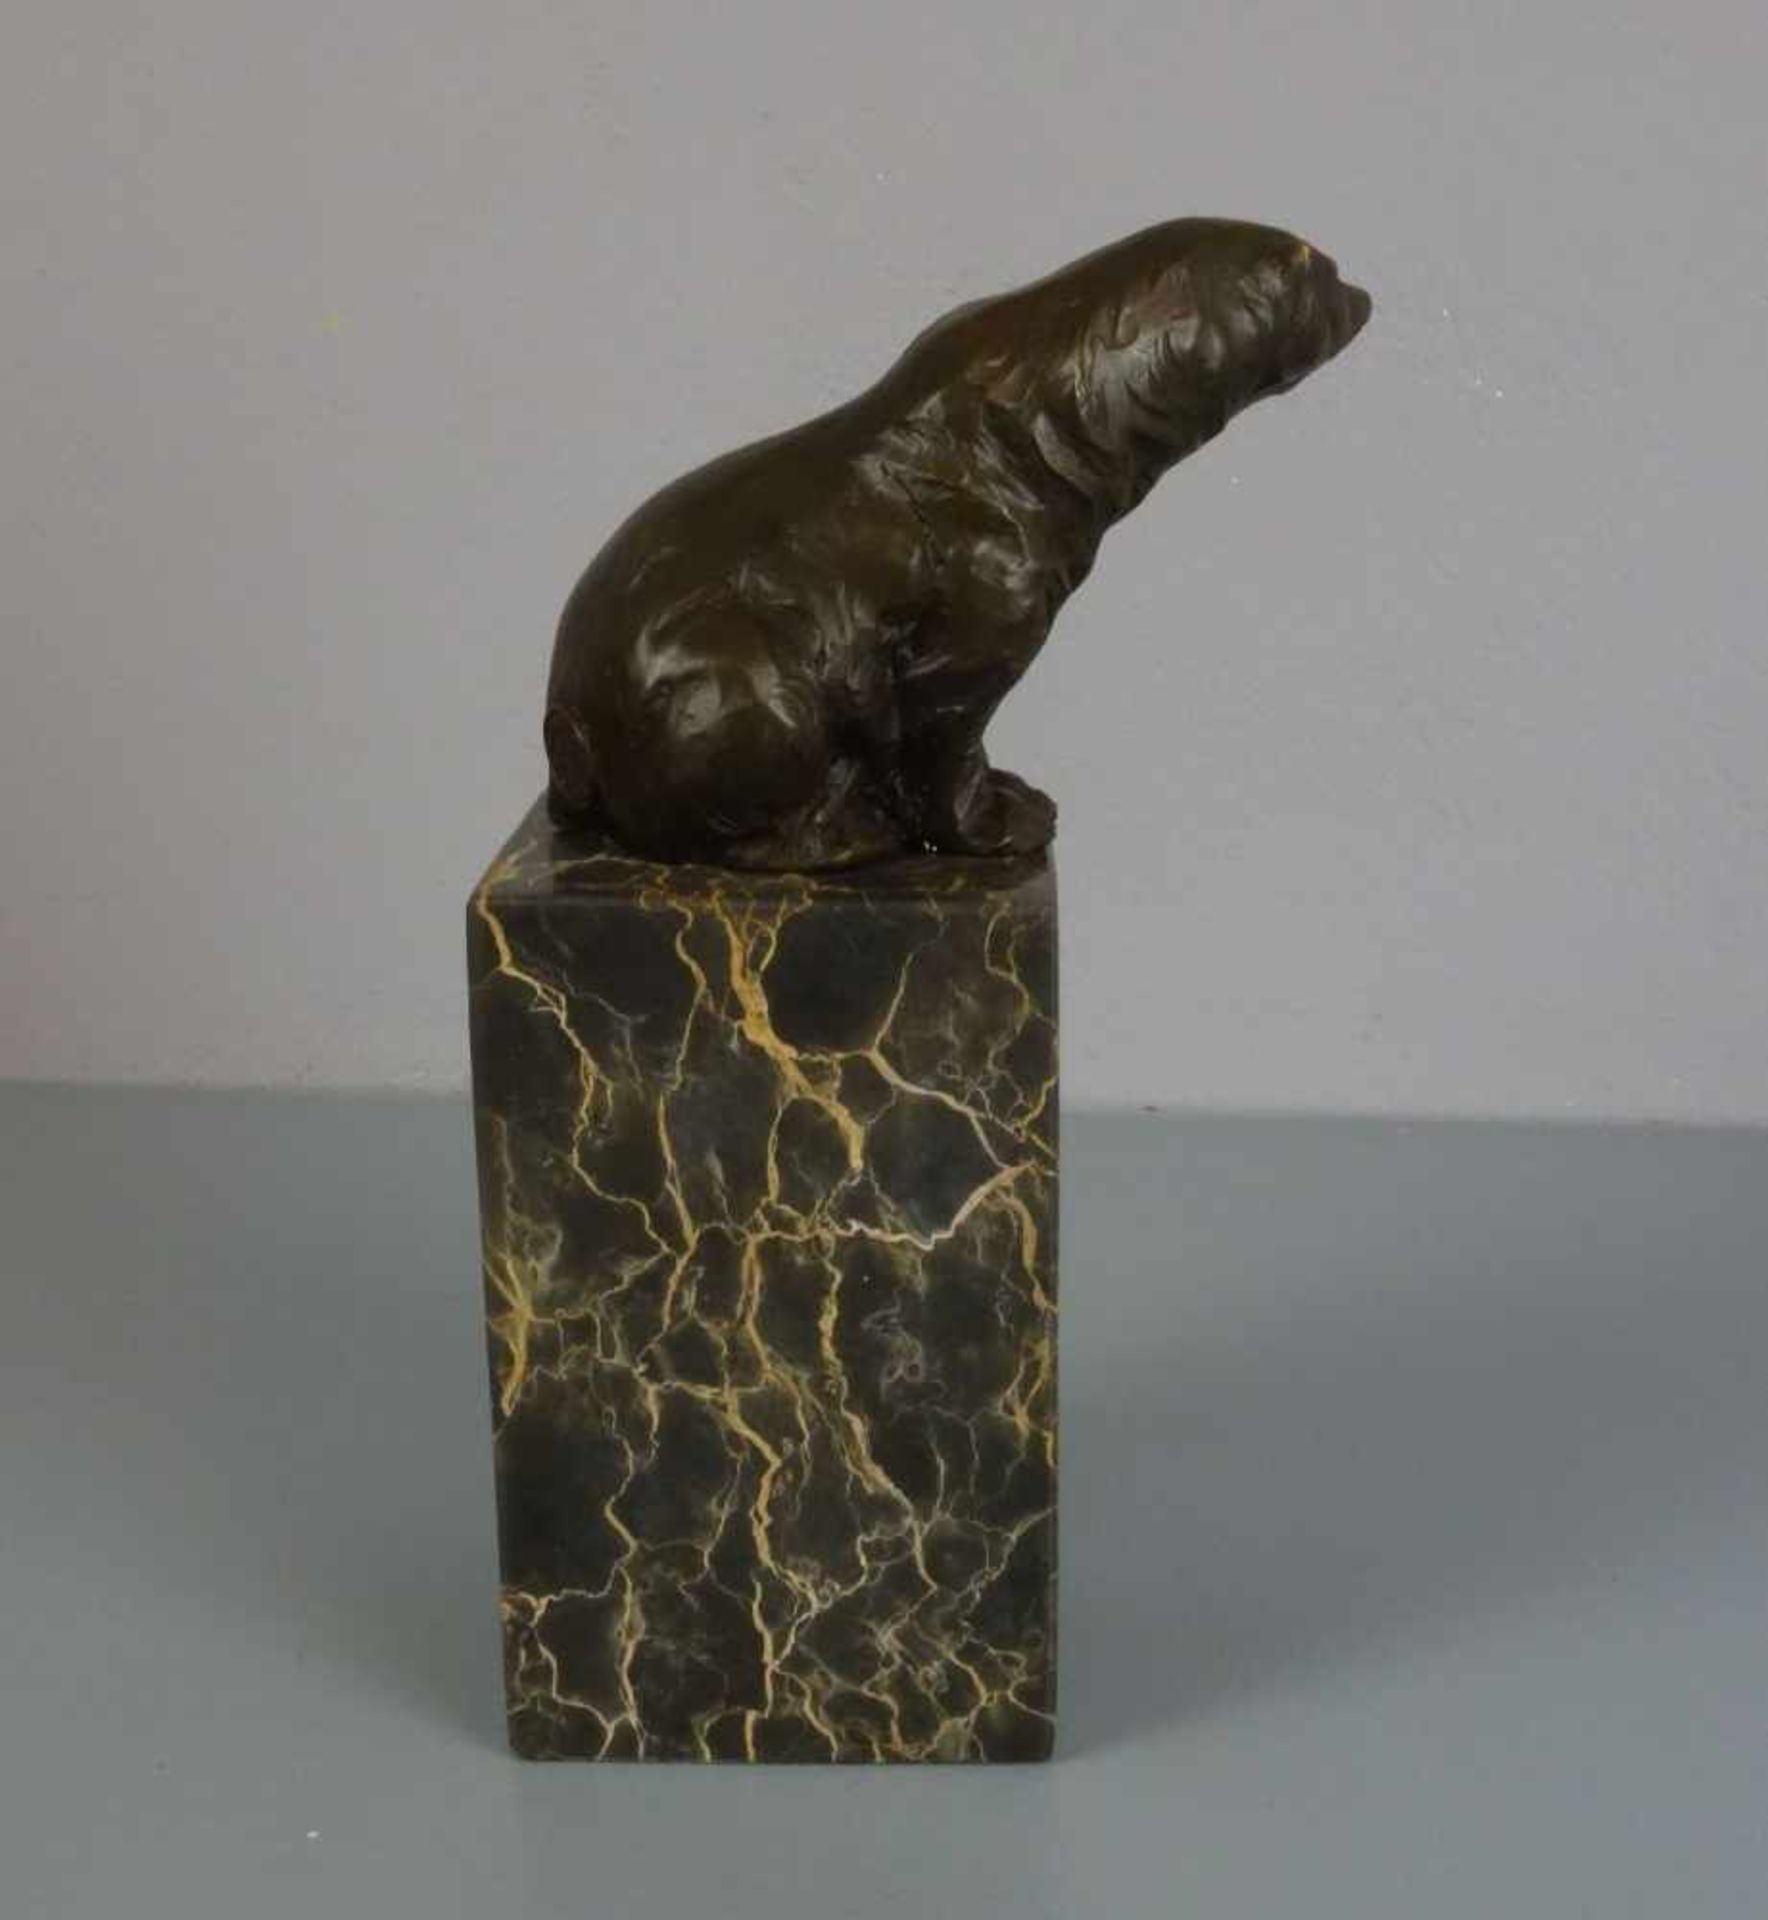 LOPEZ, MIGUEL FERNANDO (auch "Milo", geb. 1955 in Lissabon), Skulptur / sculpture: "Bär / Eisbär", - Bild 3 aus 4